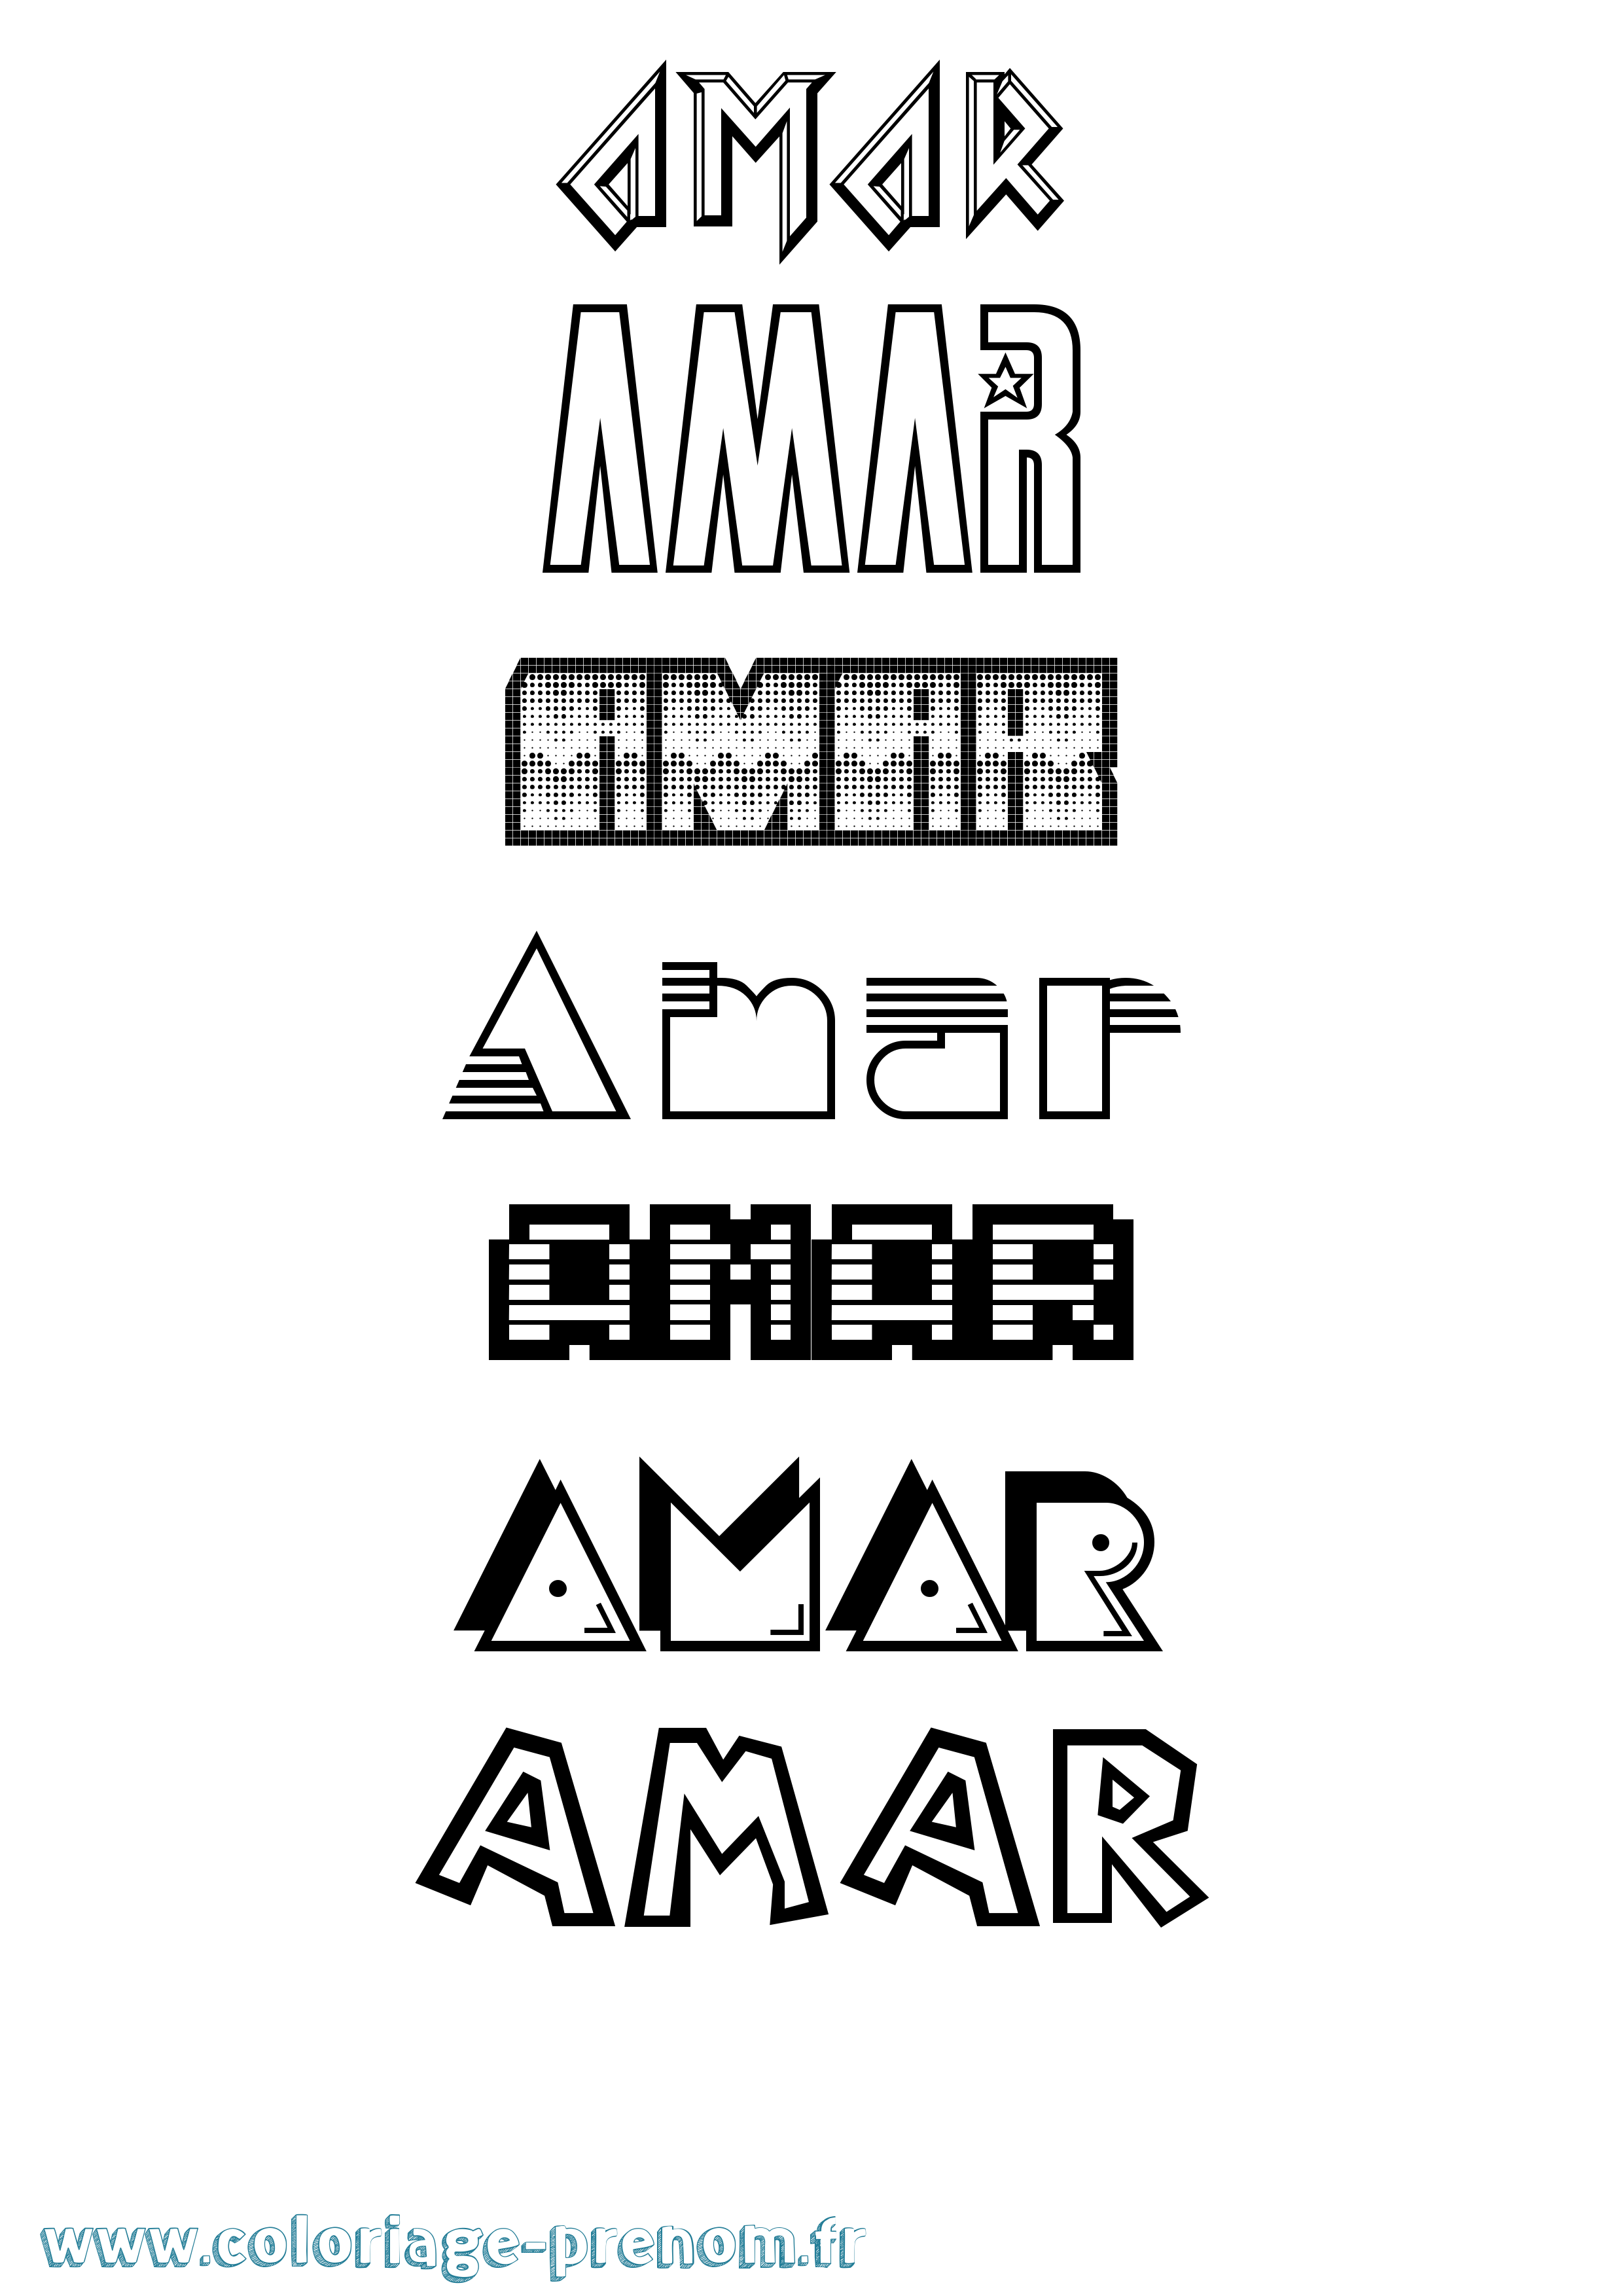 Coloriage prénom Amar